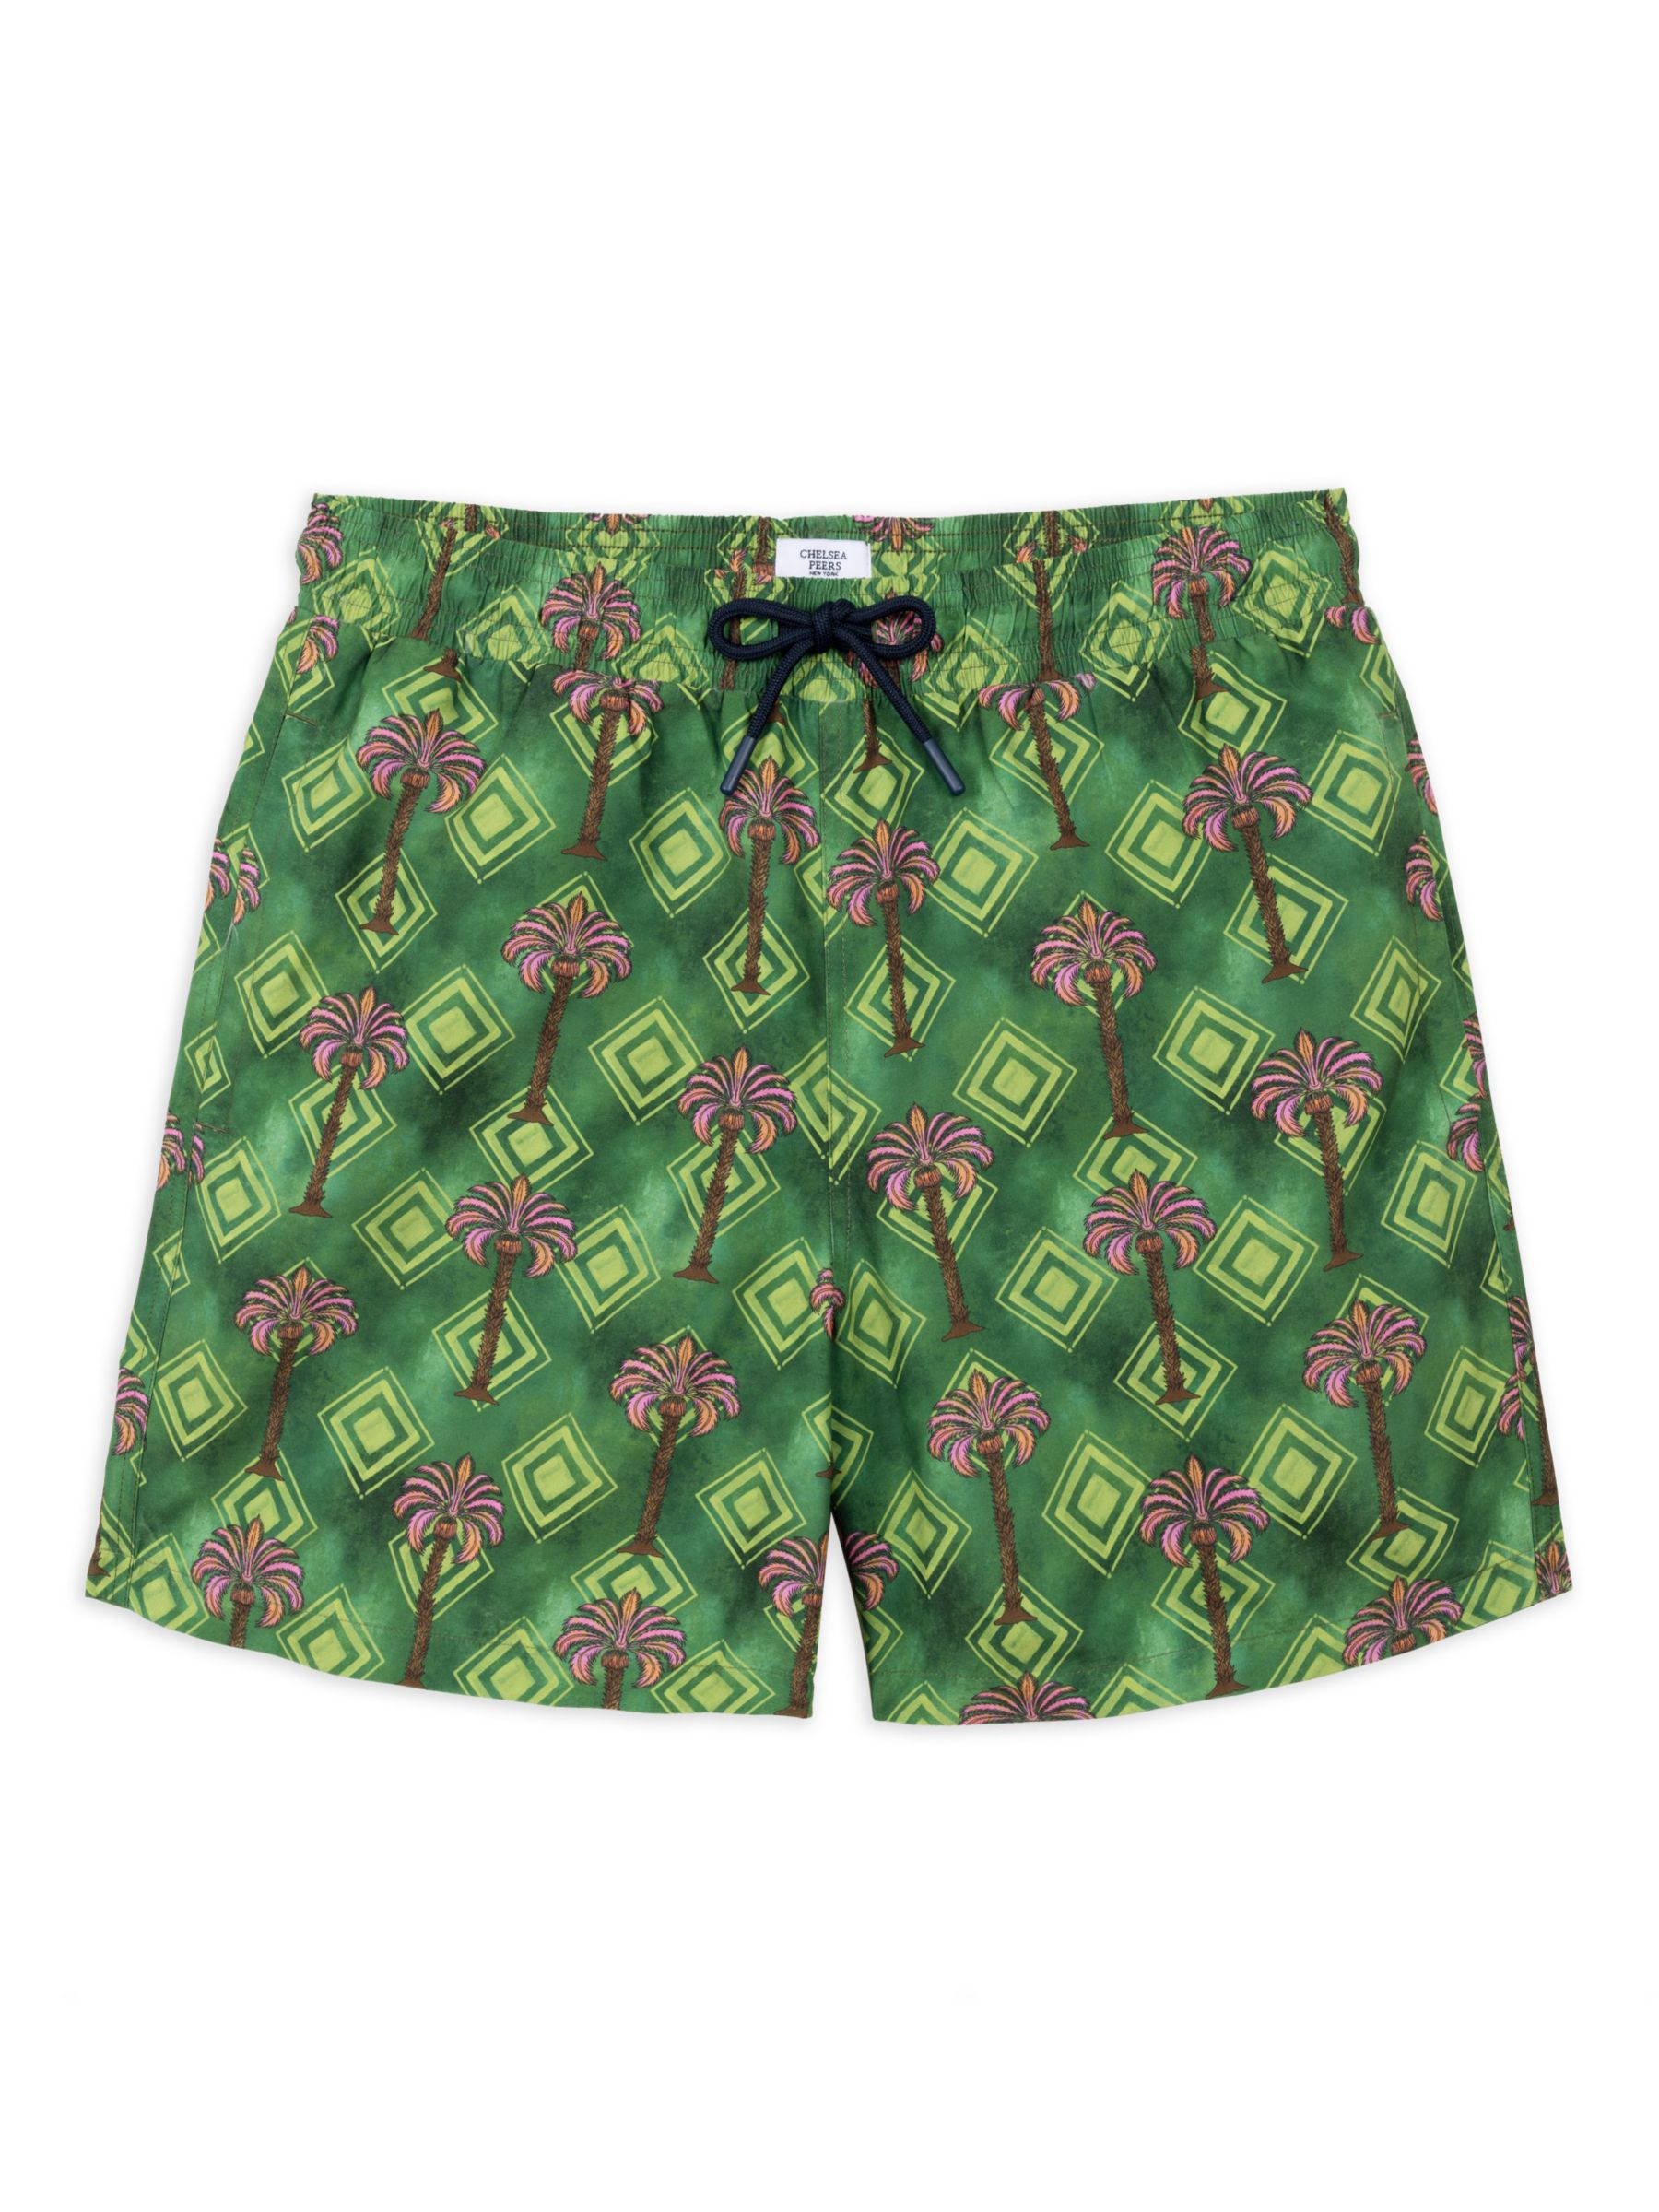 Buy Chelsea Peers Geometric Palm Print Swim Shorts, Khaki/Multi Online at johnlewis.com